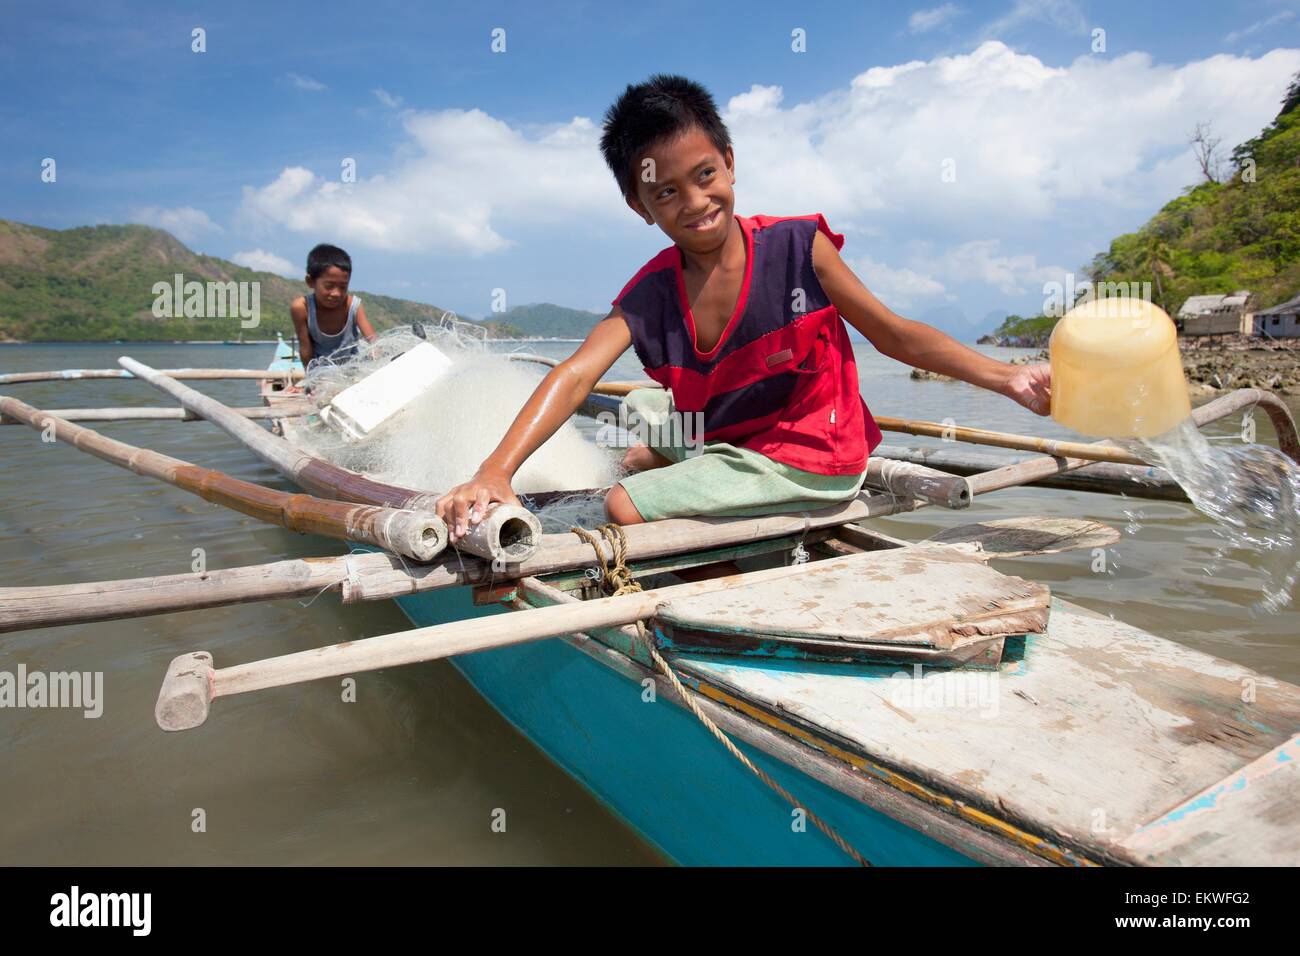 Child,Boat,Wooden,Labor,Fishing,Bailing,Bangka Stock Photo